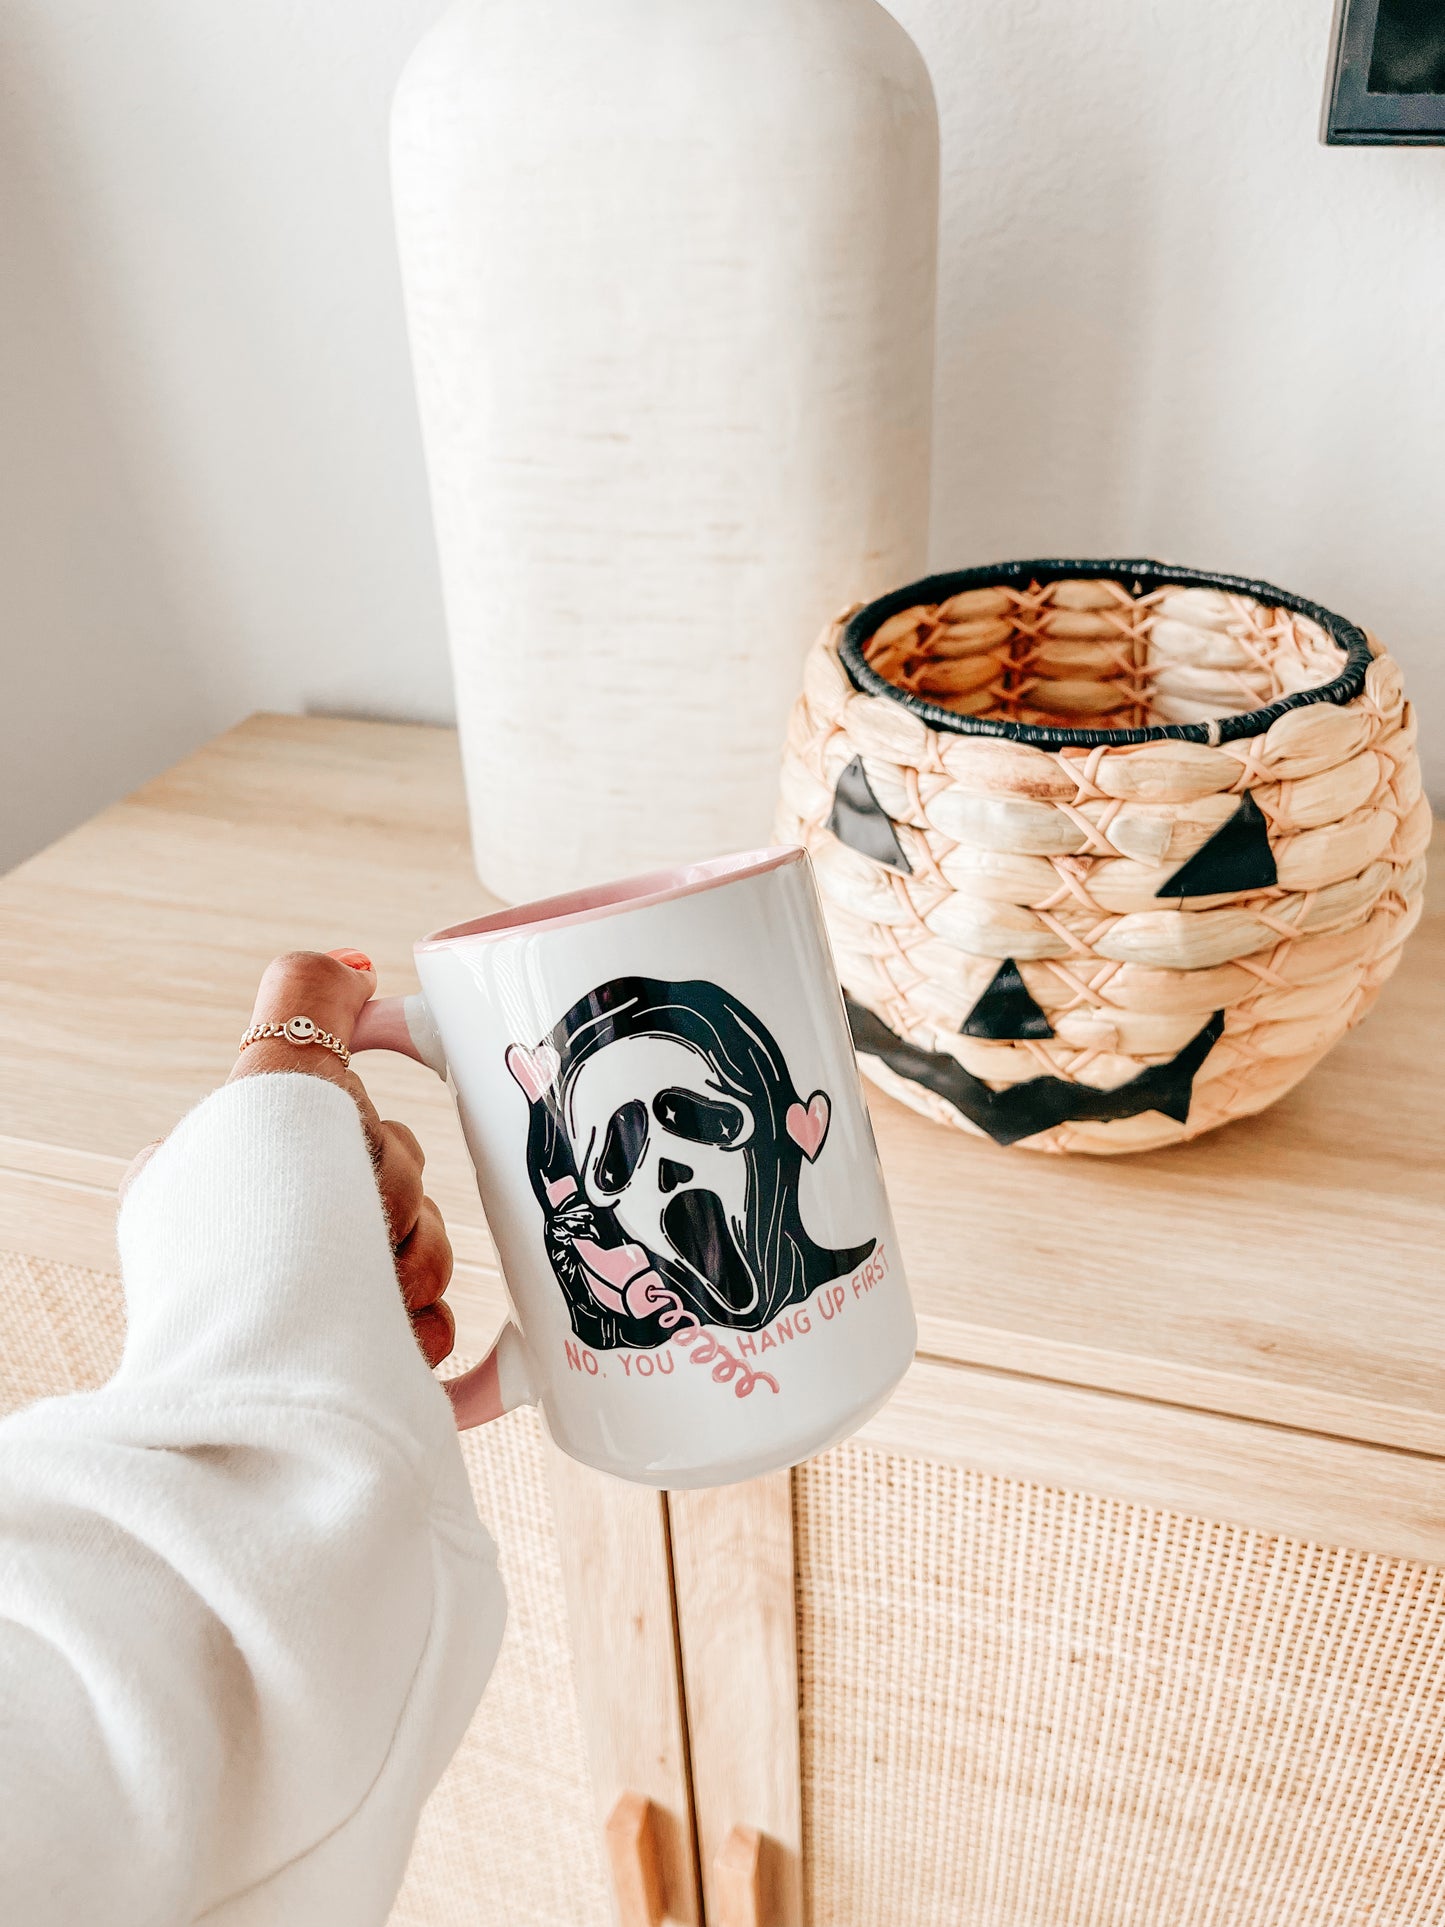 Scream Ghost Face No You Hang Up - Coffee Mug (Pink Handle & Inside)